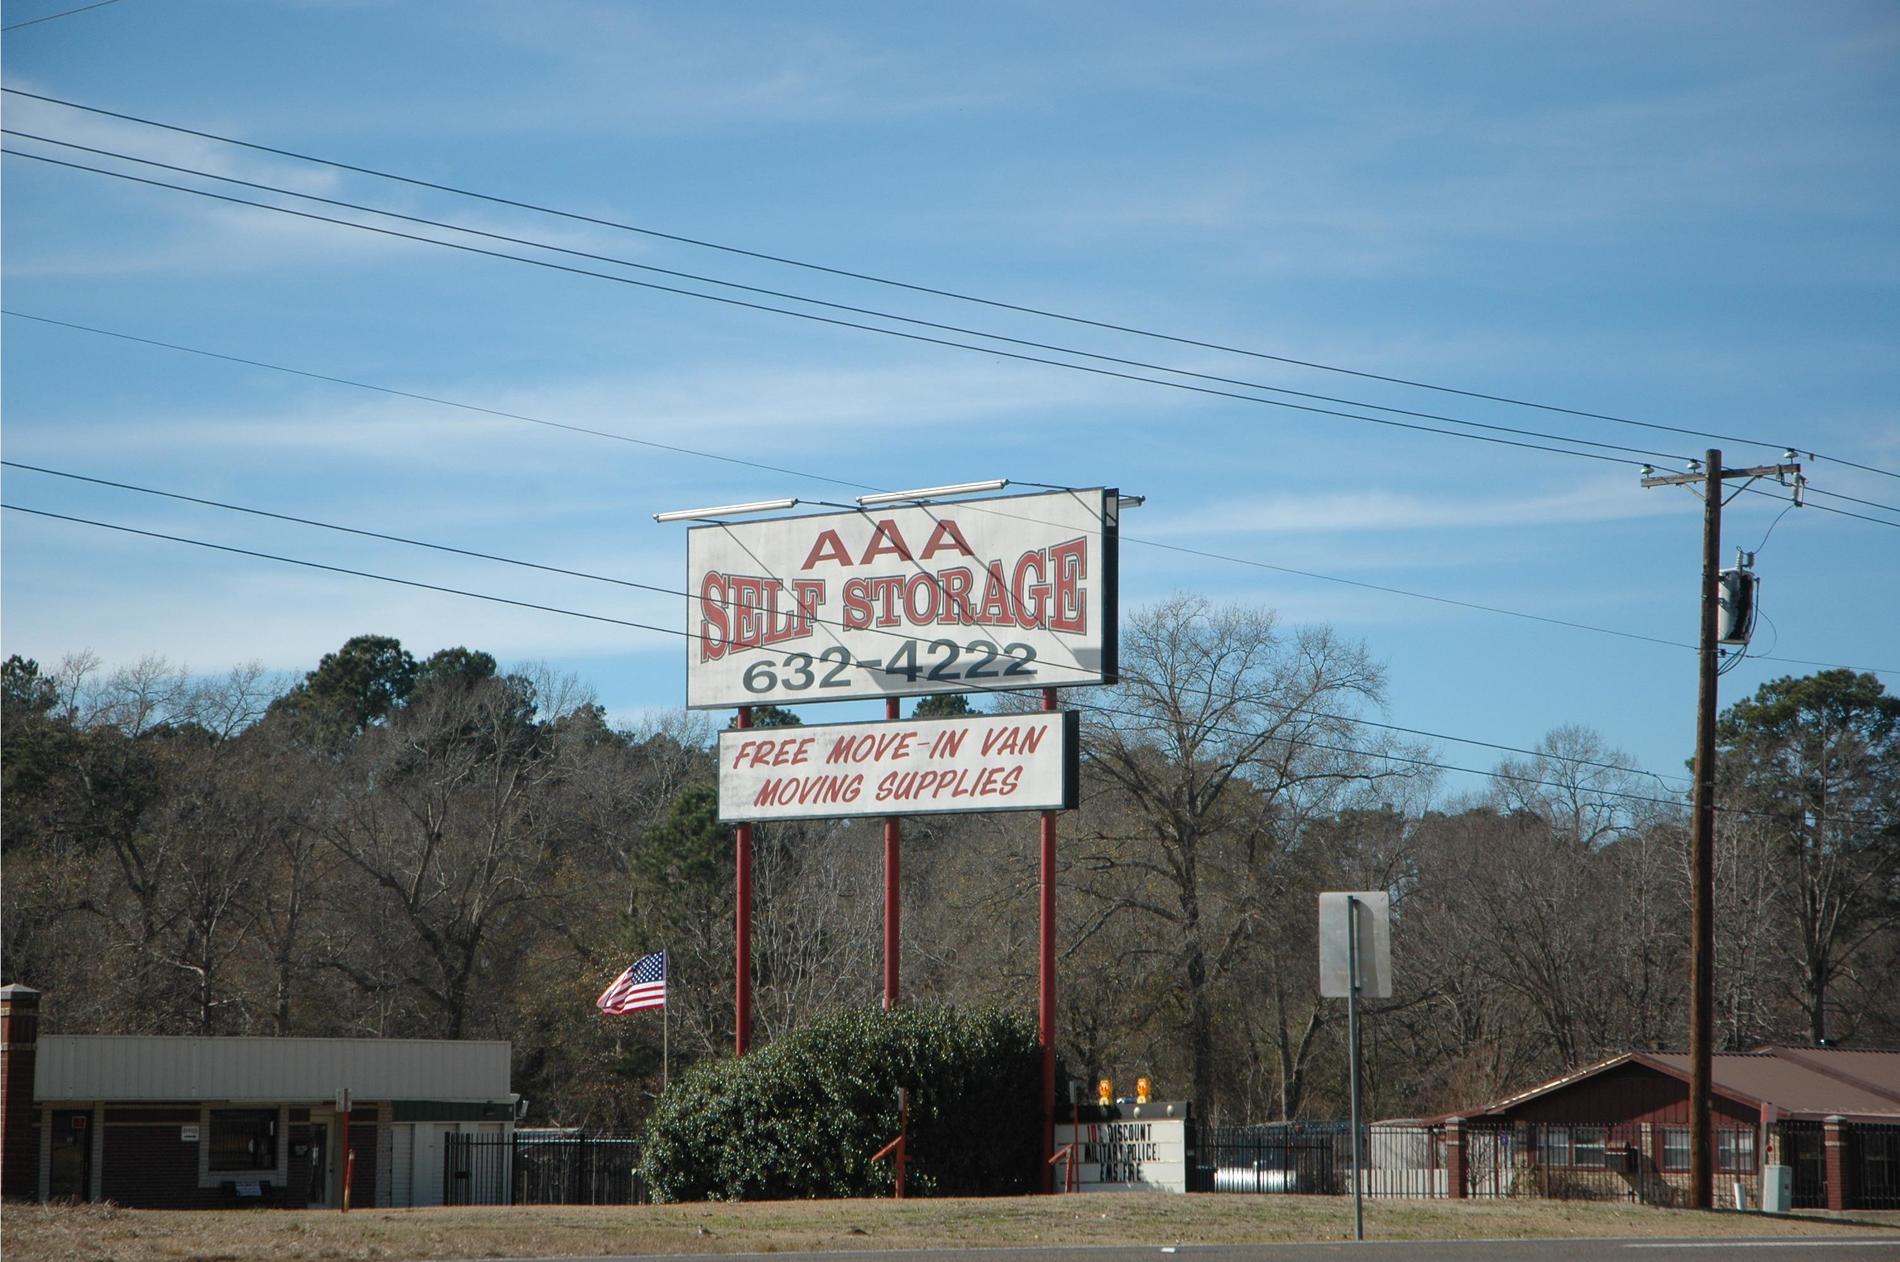 AAA Self Storage Lufkin, Texas located on Highway 69